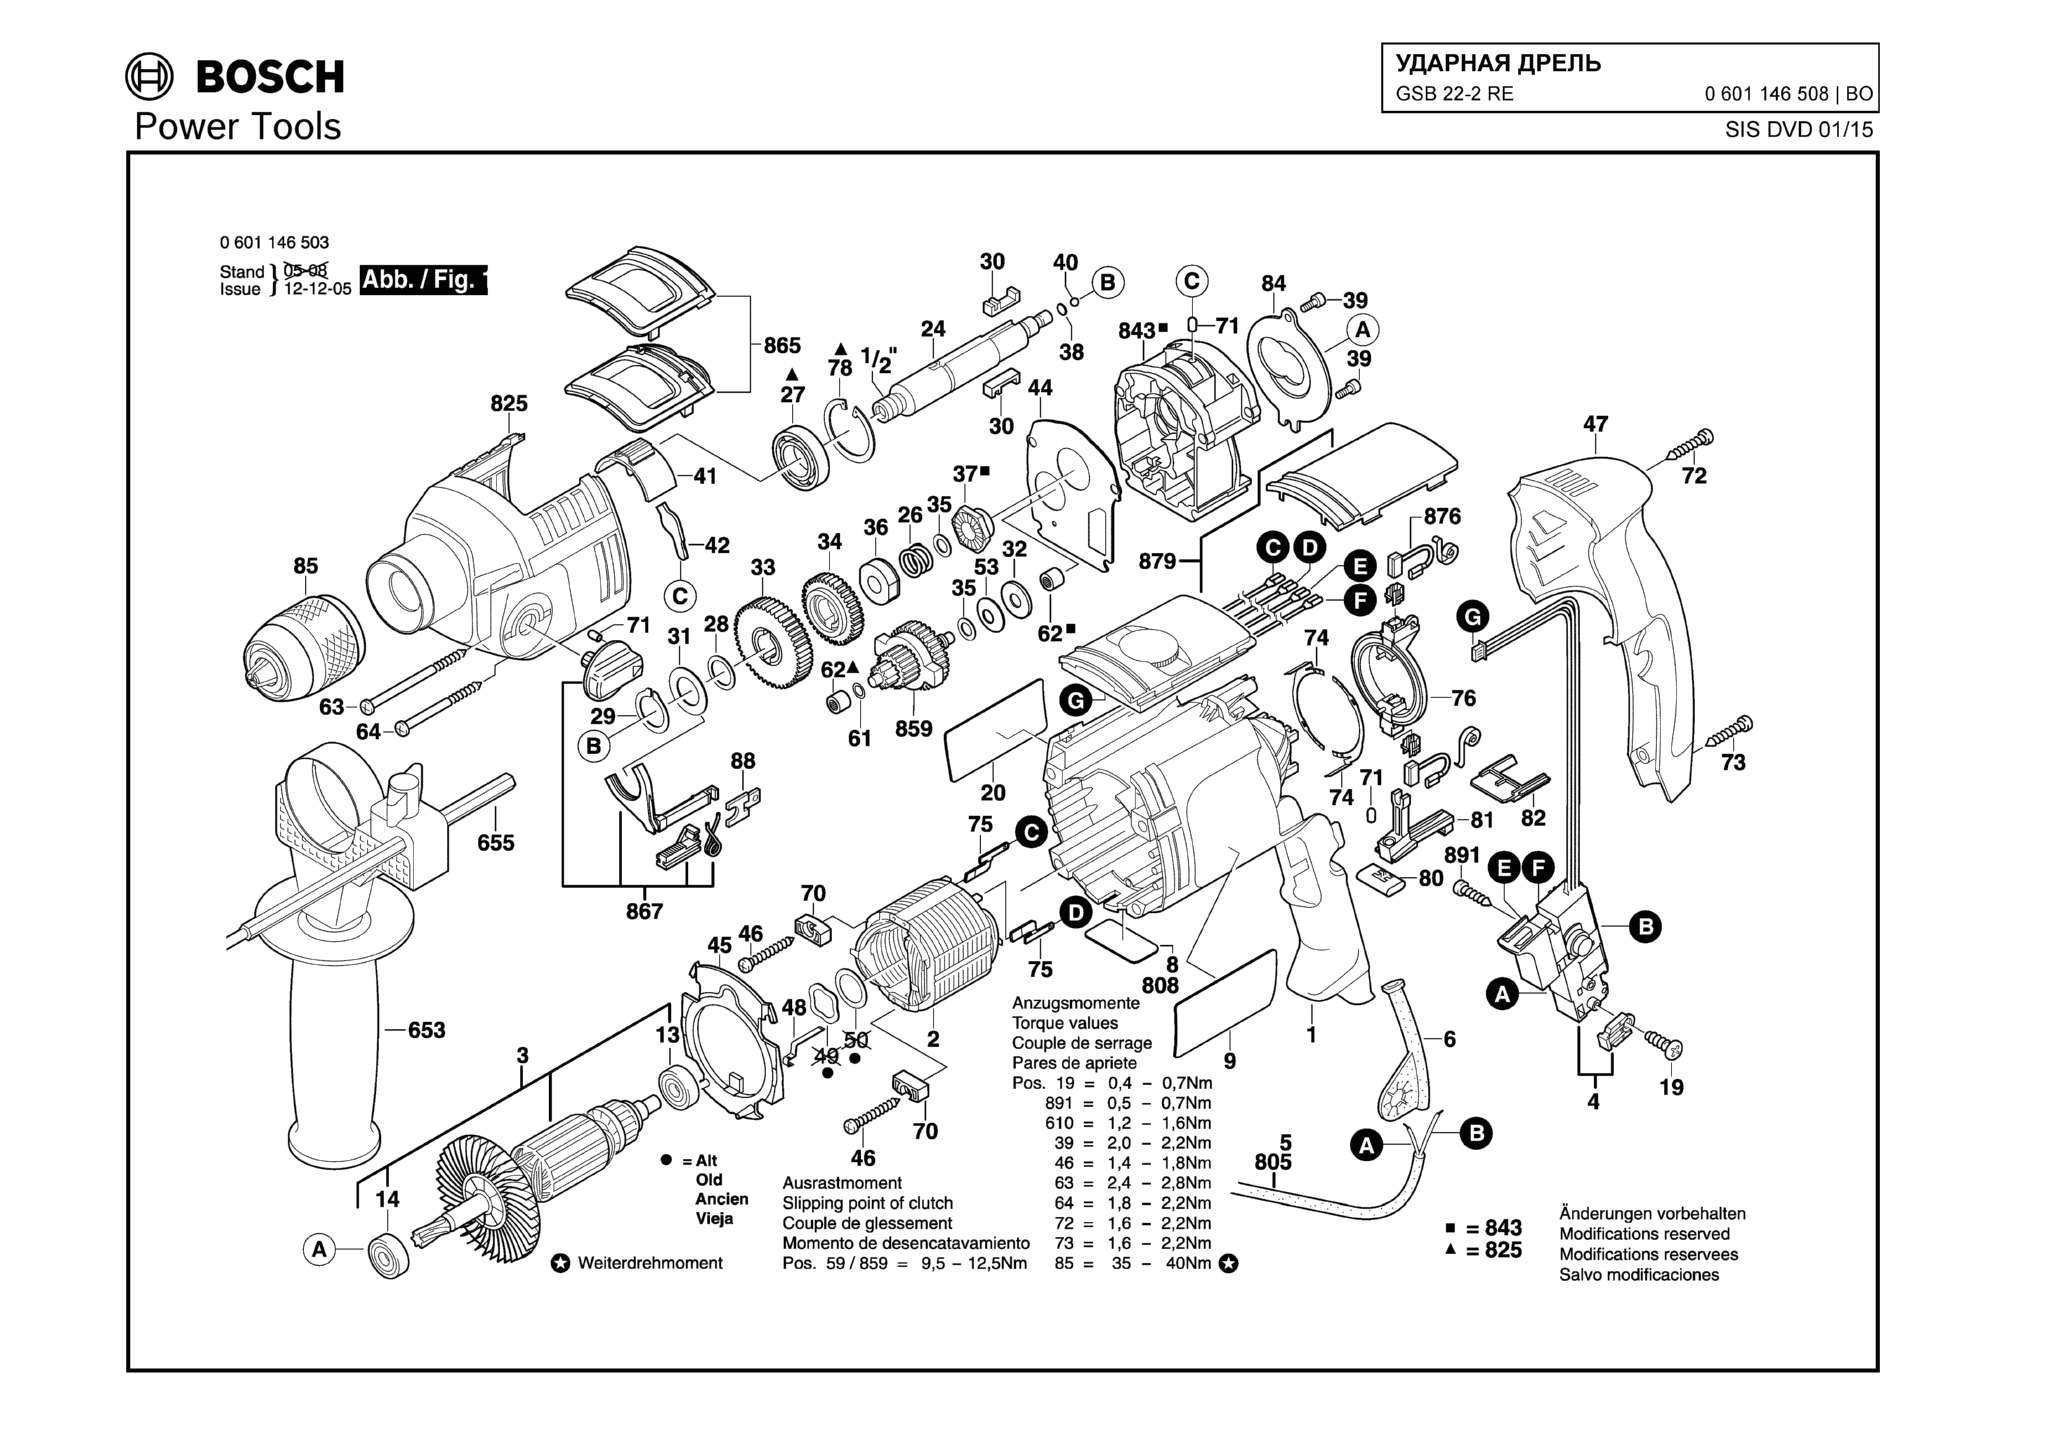 Запчасти, схема и деталировка Bosch GSB 22-2 RE (ТИП 0601146508)